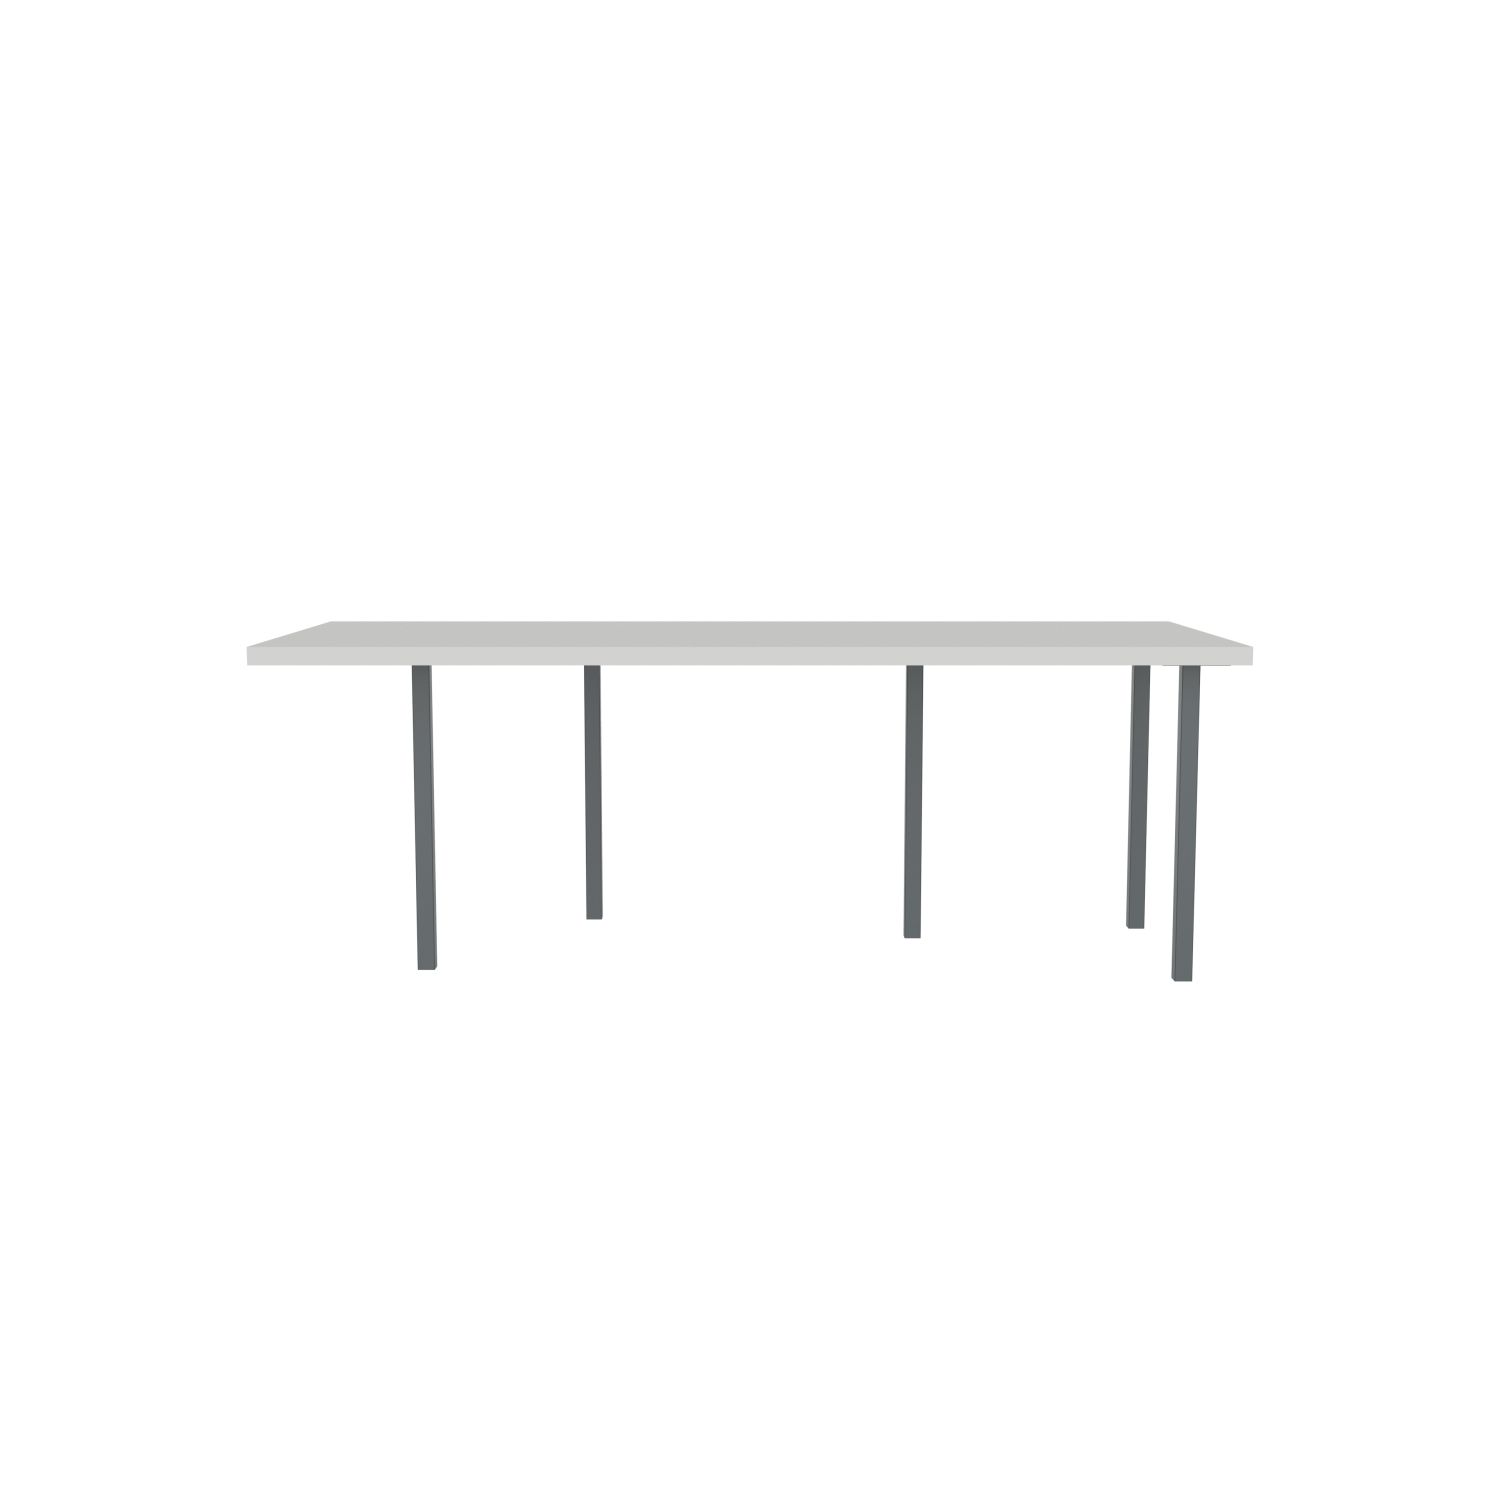 lensvelt bbrand table five fixed heigt 915x218 hpl boring grey 50 mm price level 1 dark grey ral7011